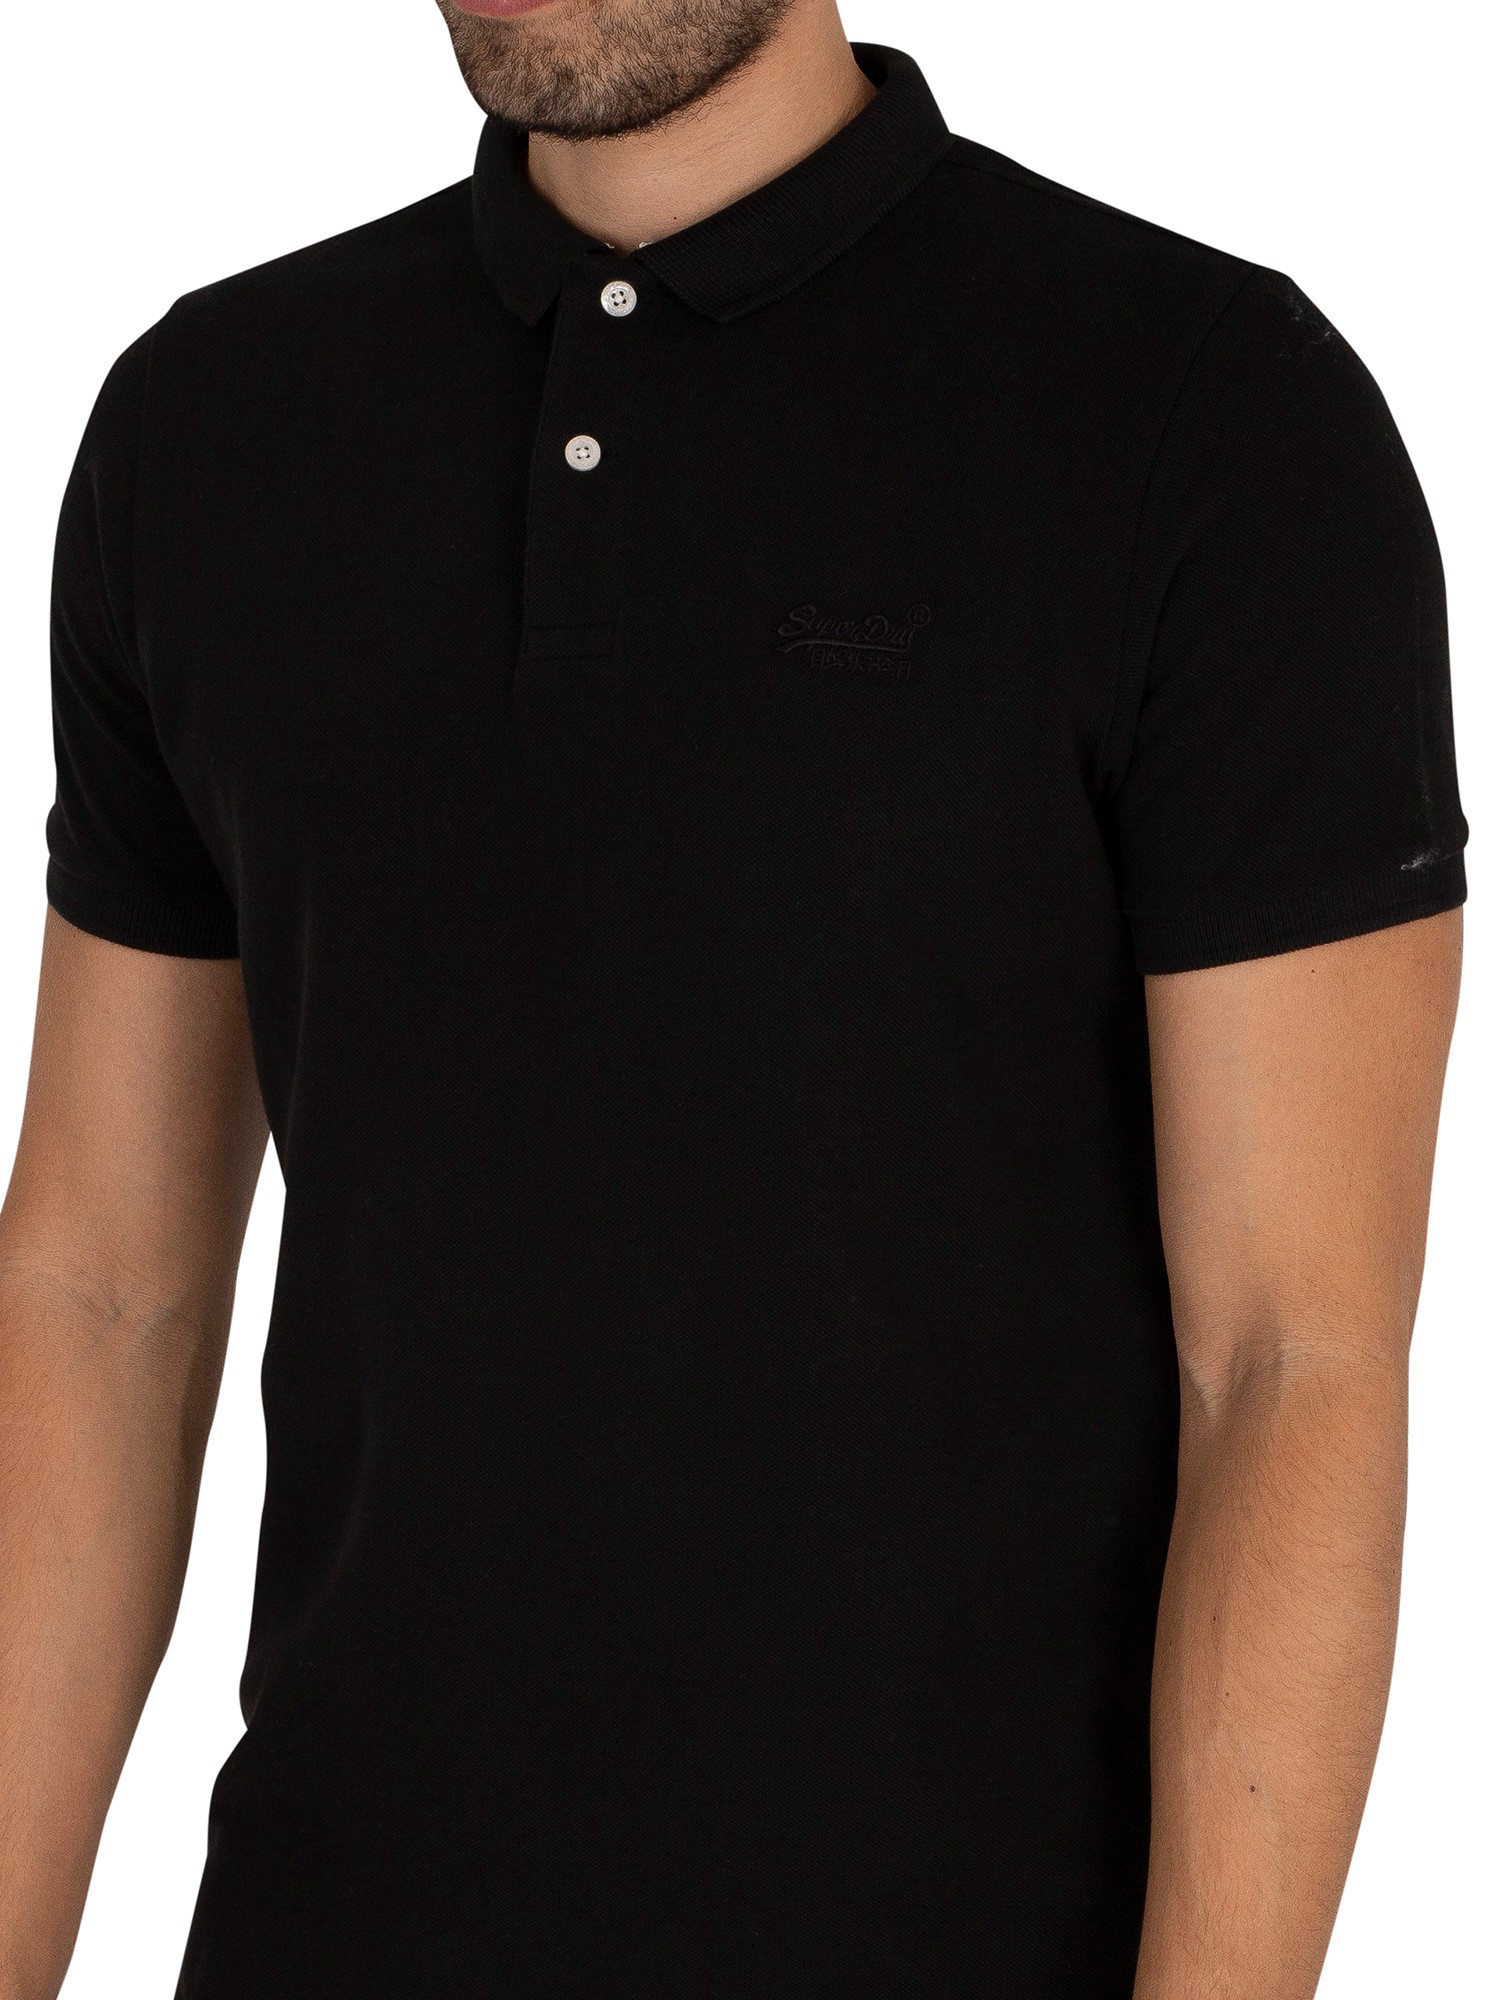 Superdry Classic Pique Polo Shirt - Black/Black | Standout